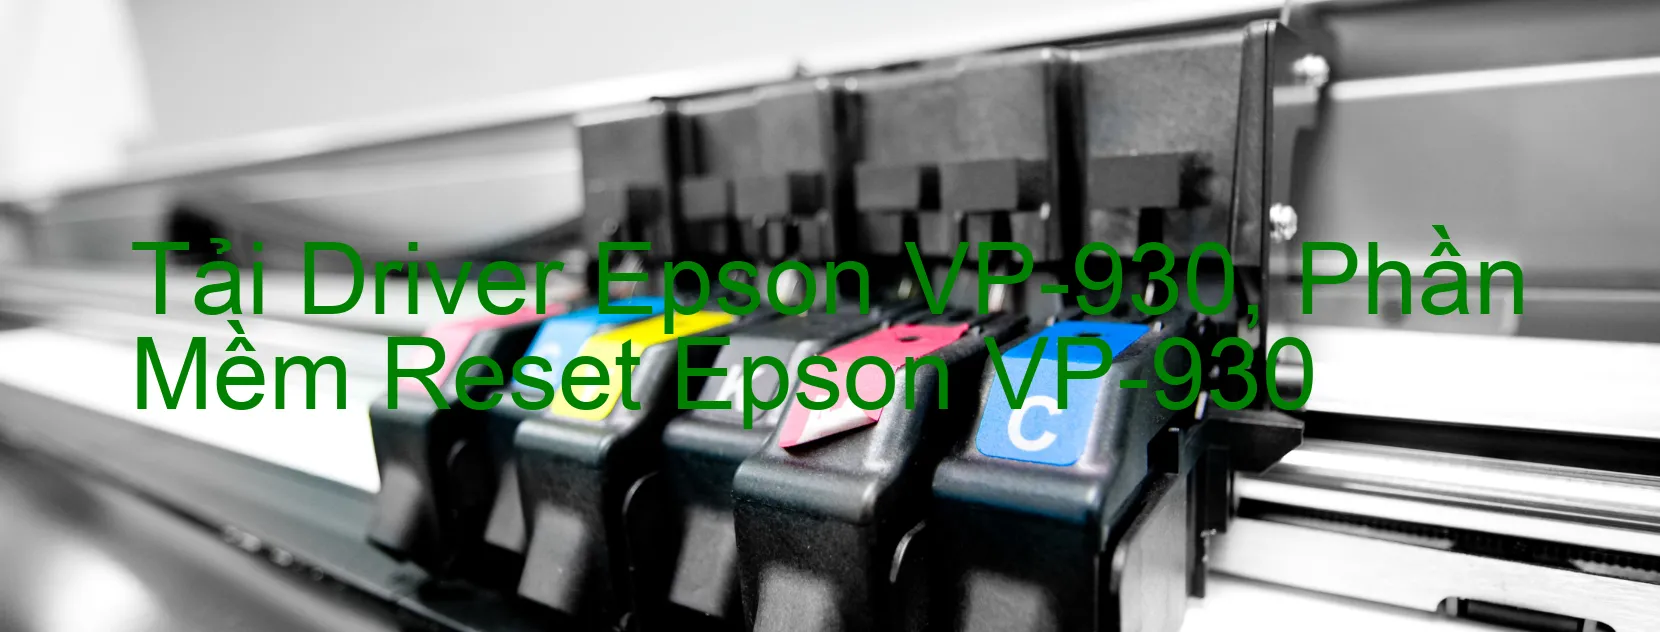 Driver Epson VP-930, Phần Mềm Reset Epson VP-930